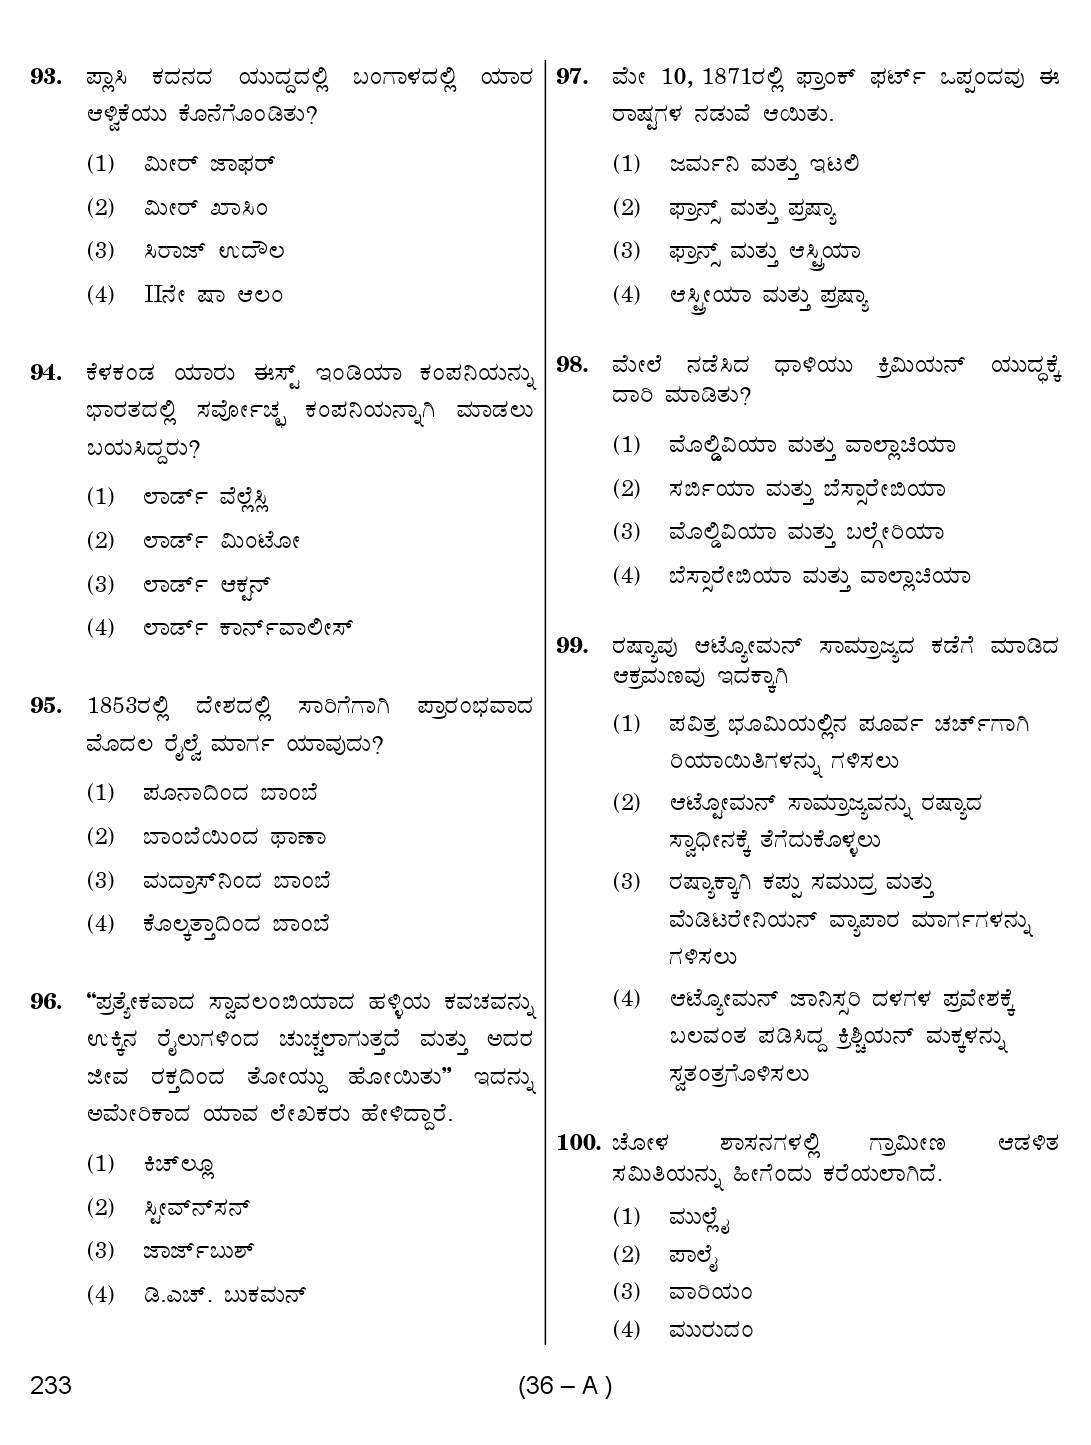 Karnataka PSC History Teacher Exam Sample Question Paper Subject code 233 36